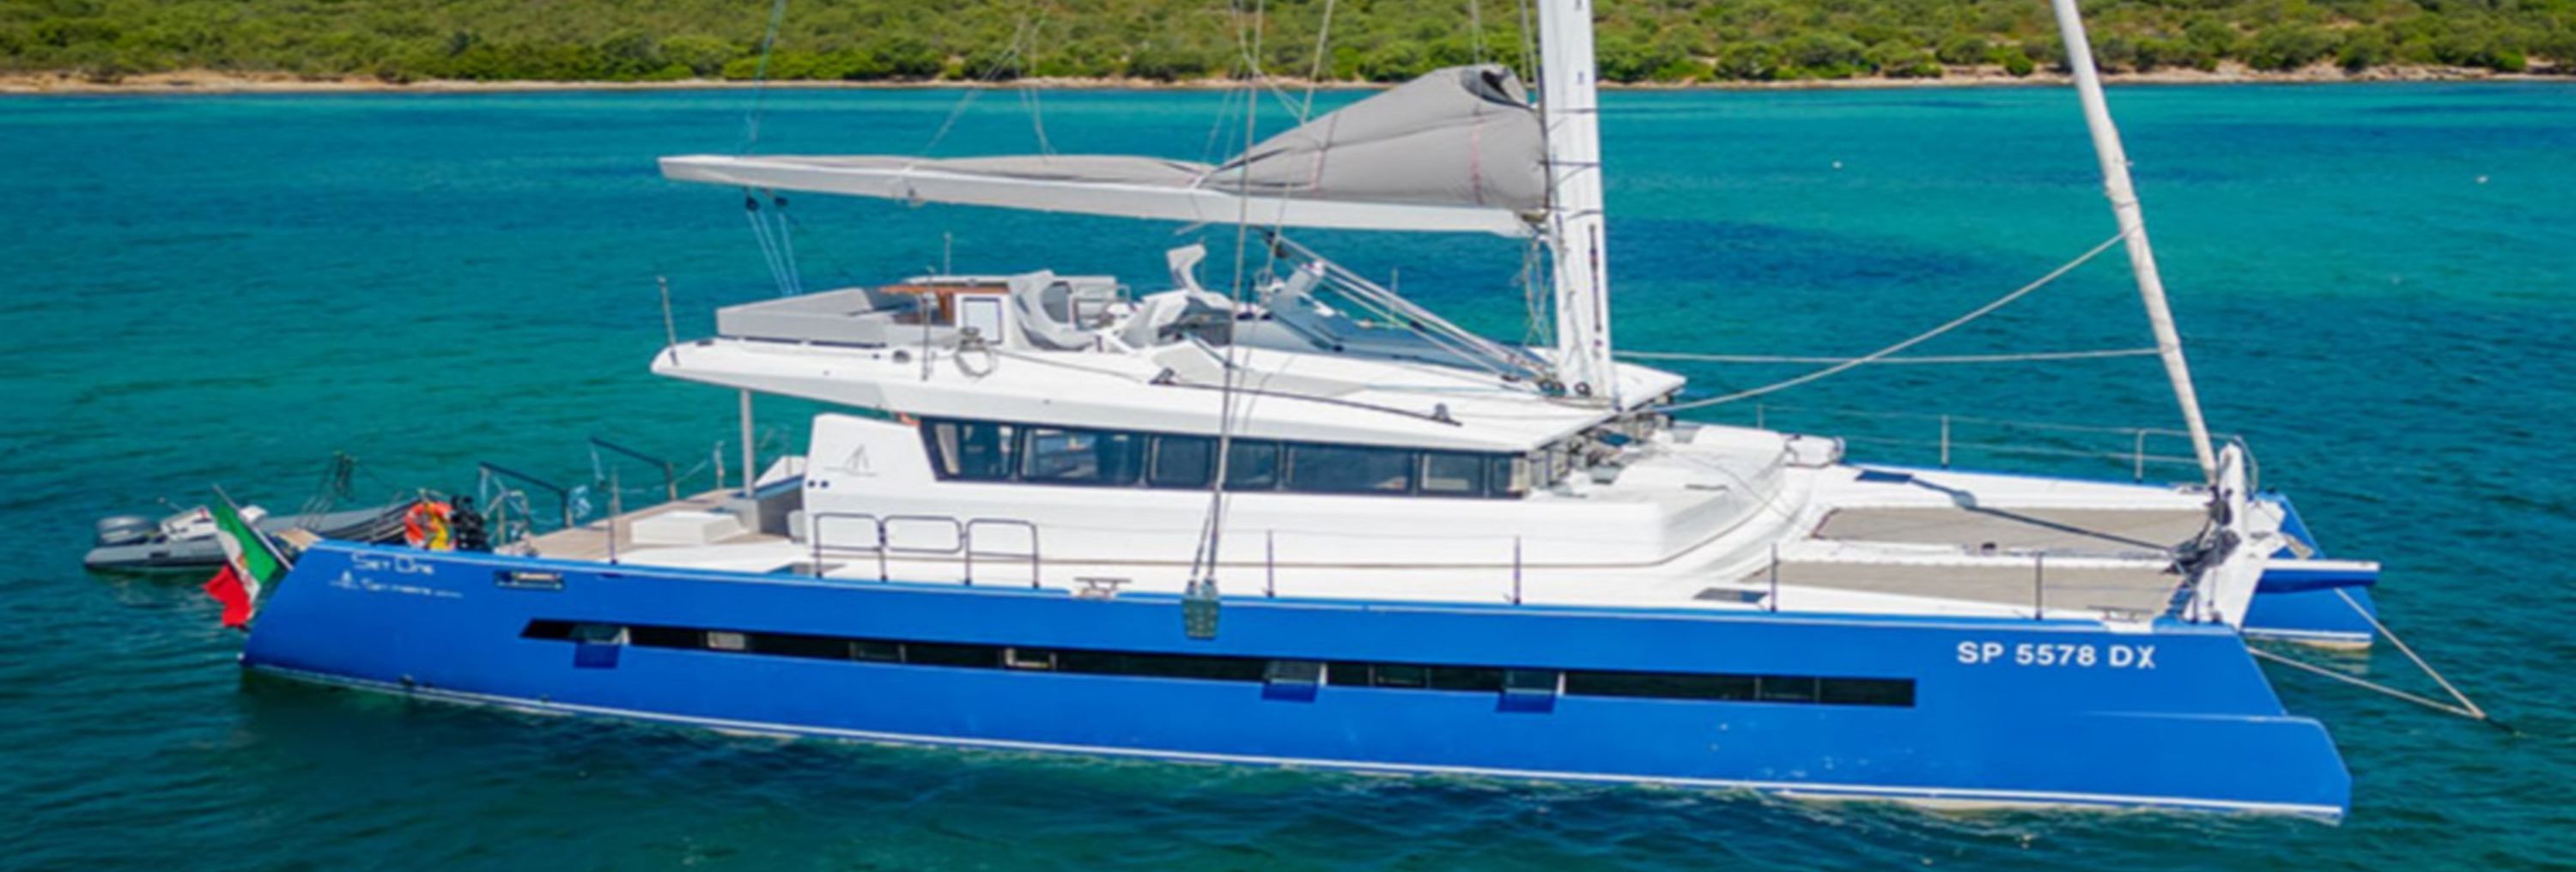 SET ONE : New catamaran for sale